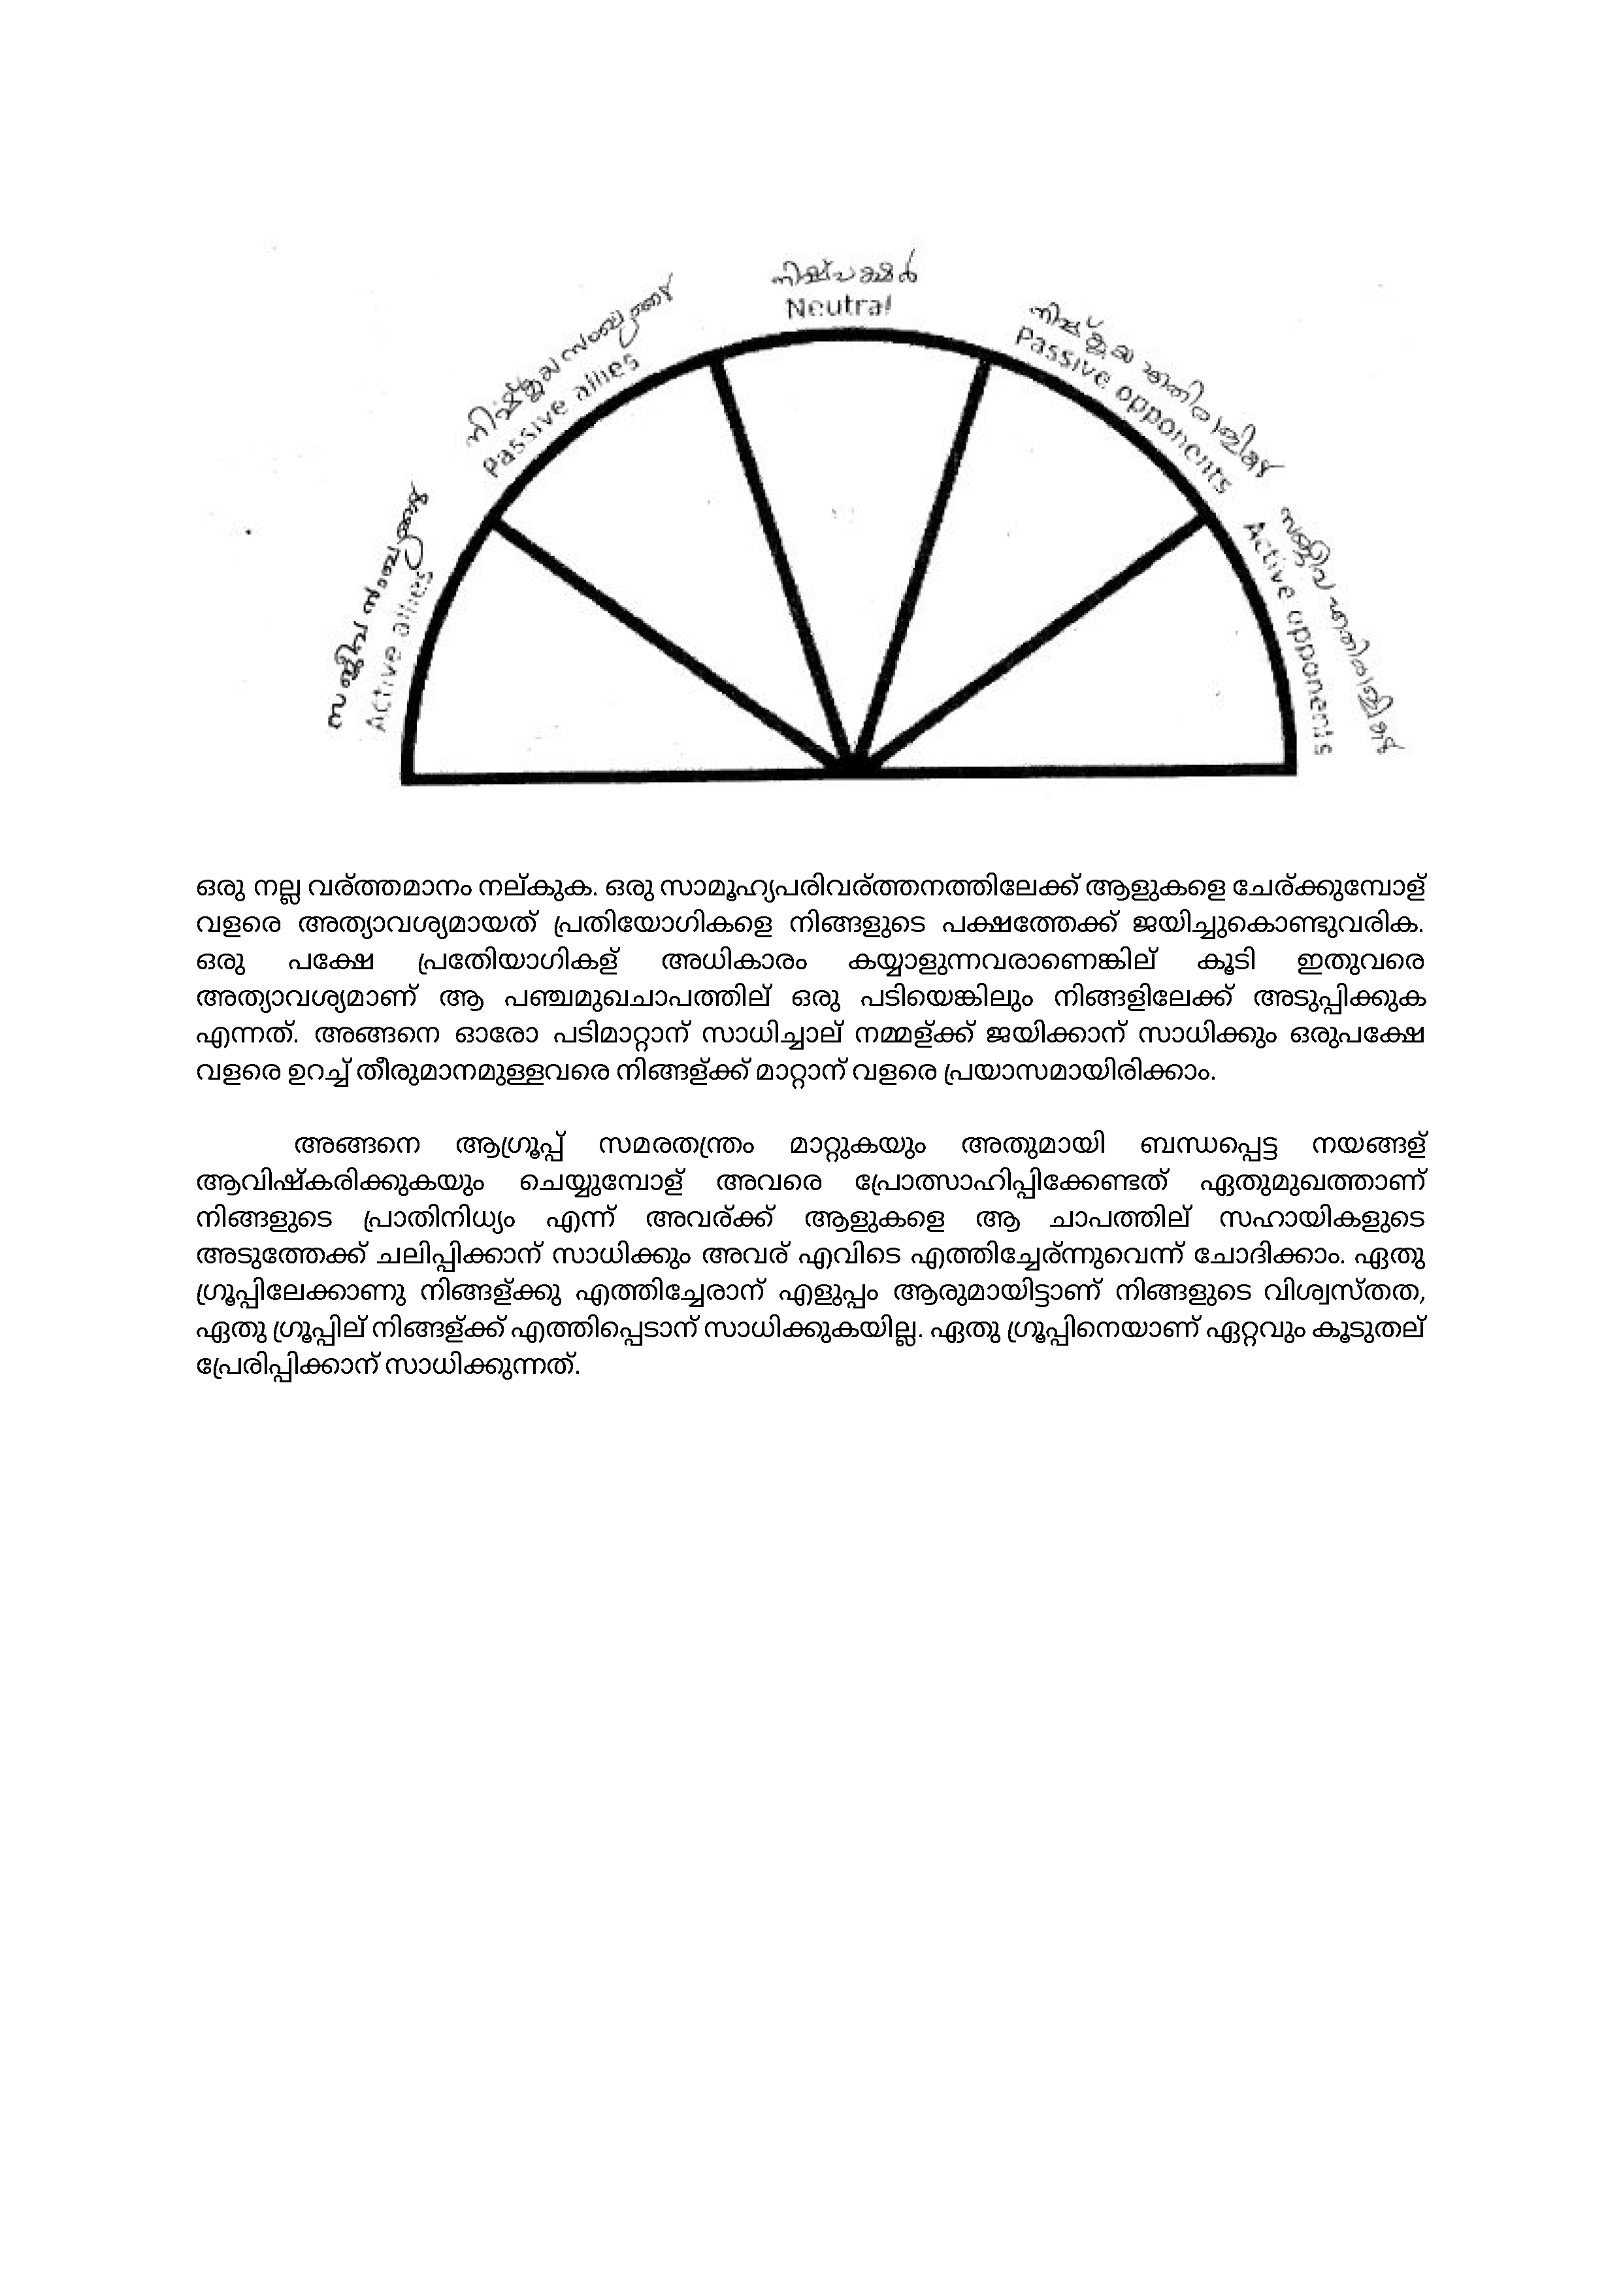 Spectrum of Allies (Malayalam)